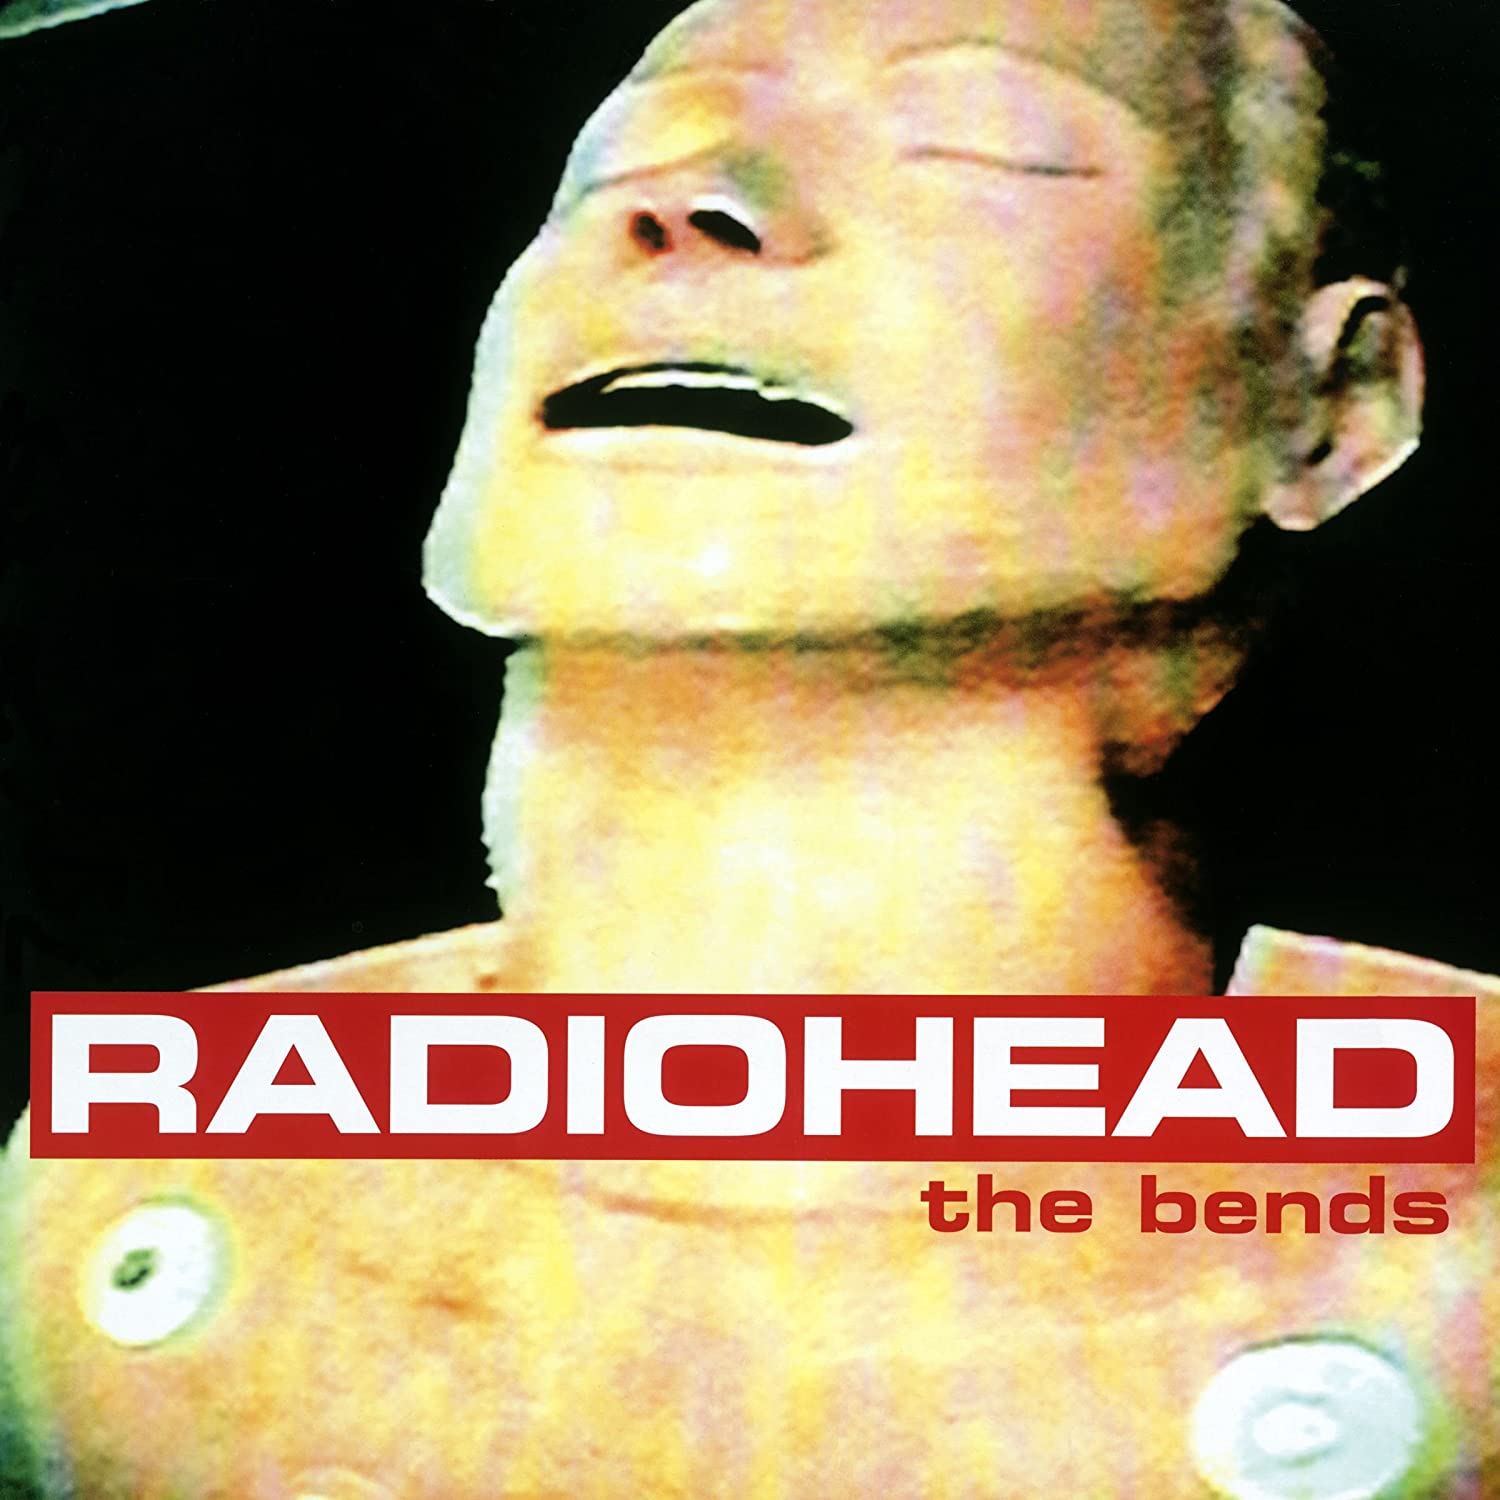 Radiohead "The Bends" LP